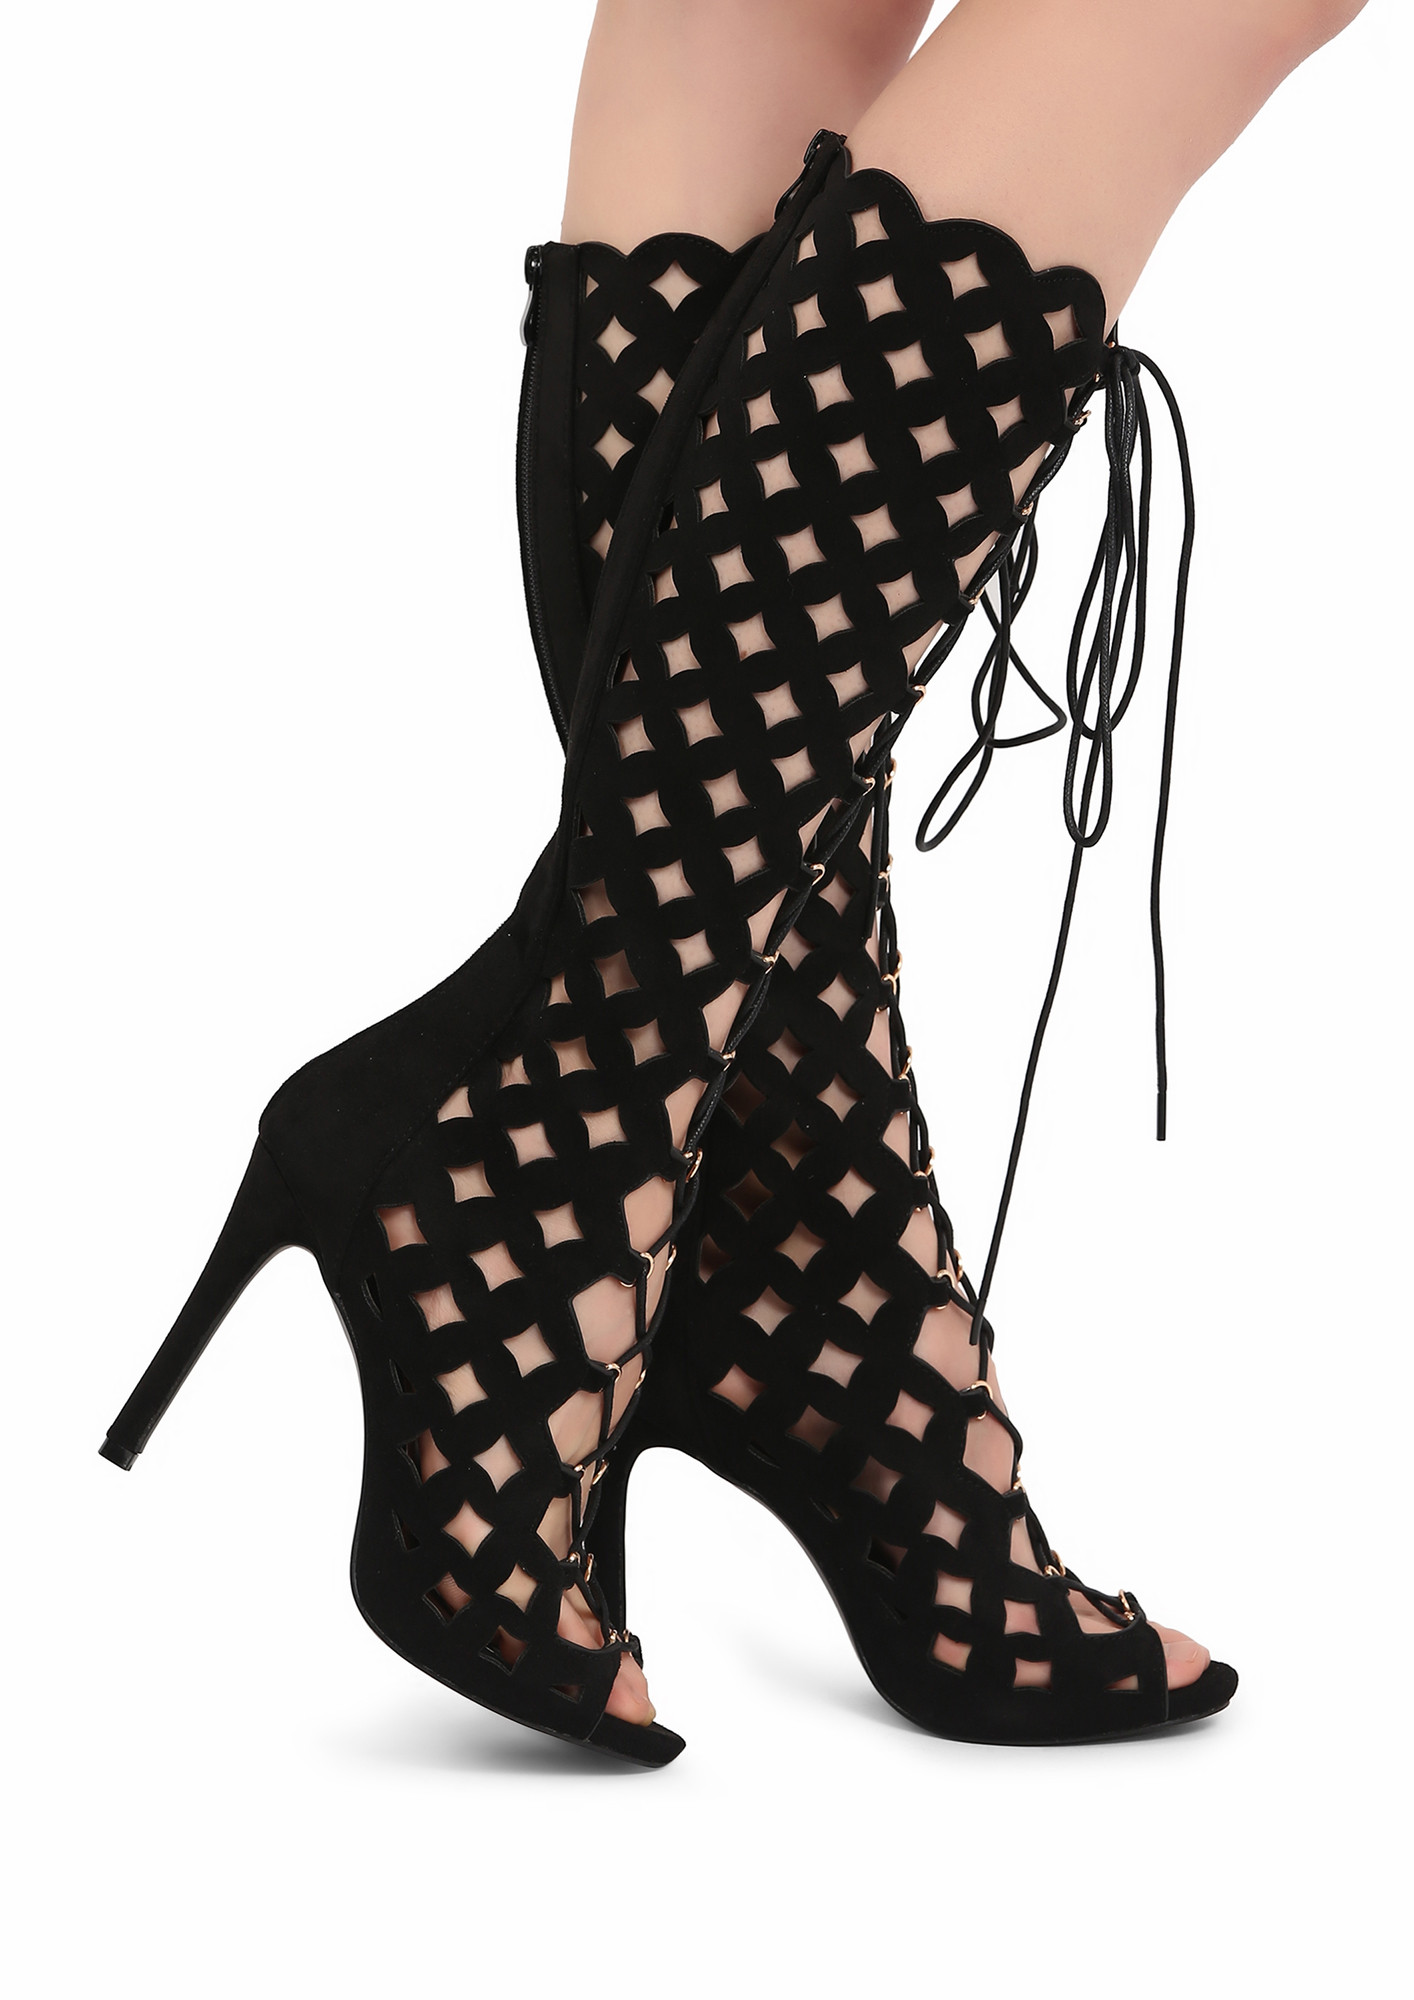 Strappy sandals - Black - Ladies | H&M IN